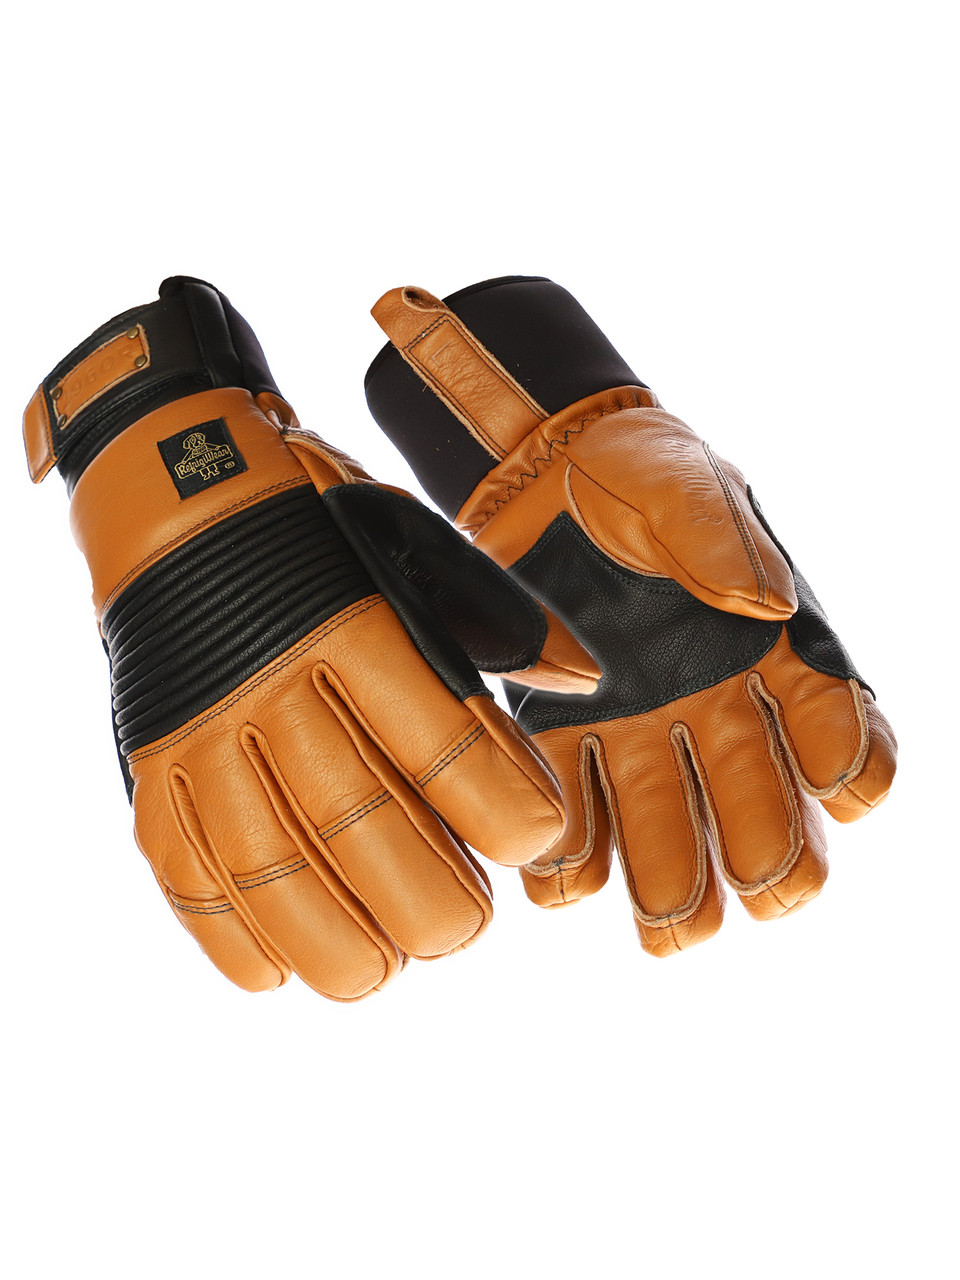 Refrigiwear 54 Gold Waterproof Insulated Glove